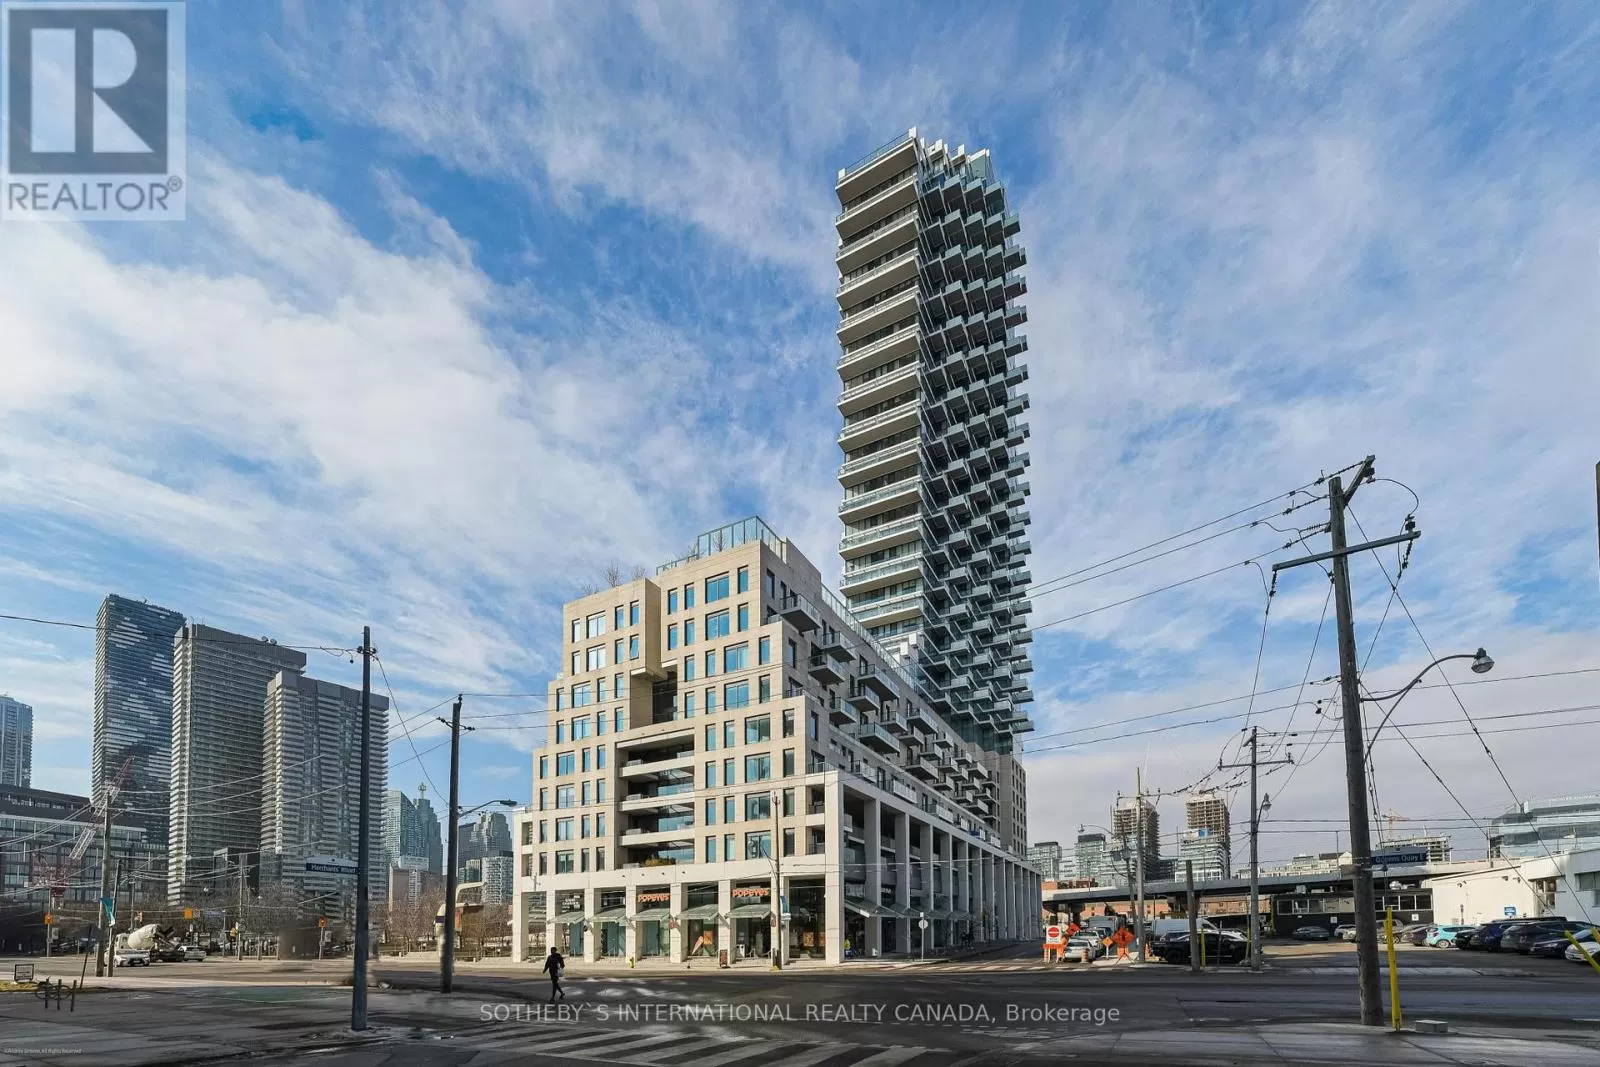 Apartment for rent: 517 - 12 Bonnycastle Street S, Toronto, Ontario M5A 3T7